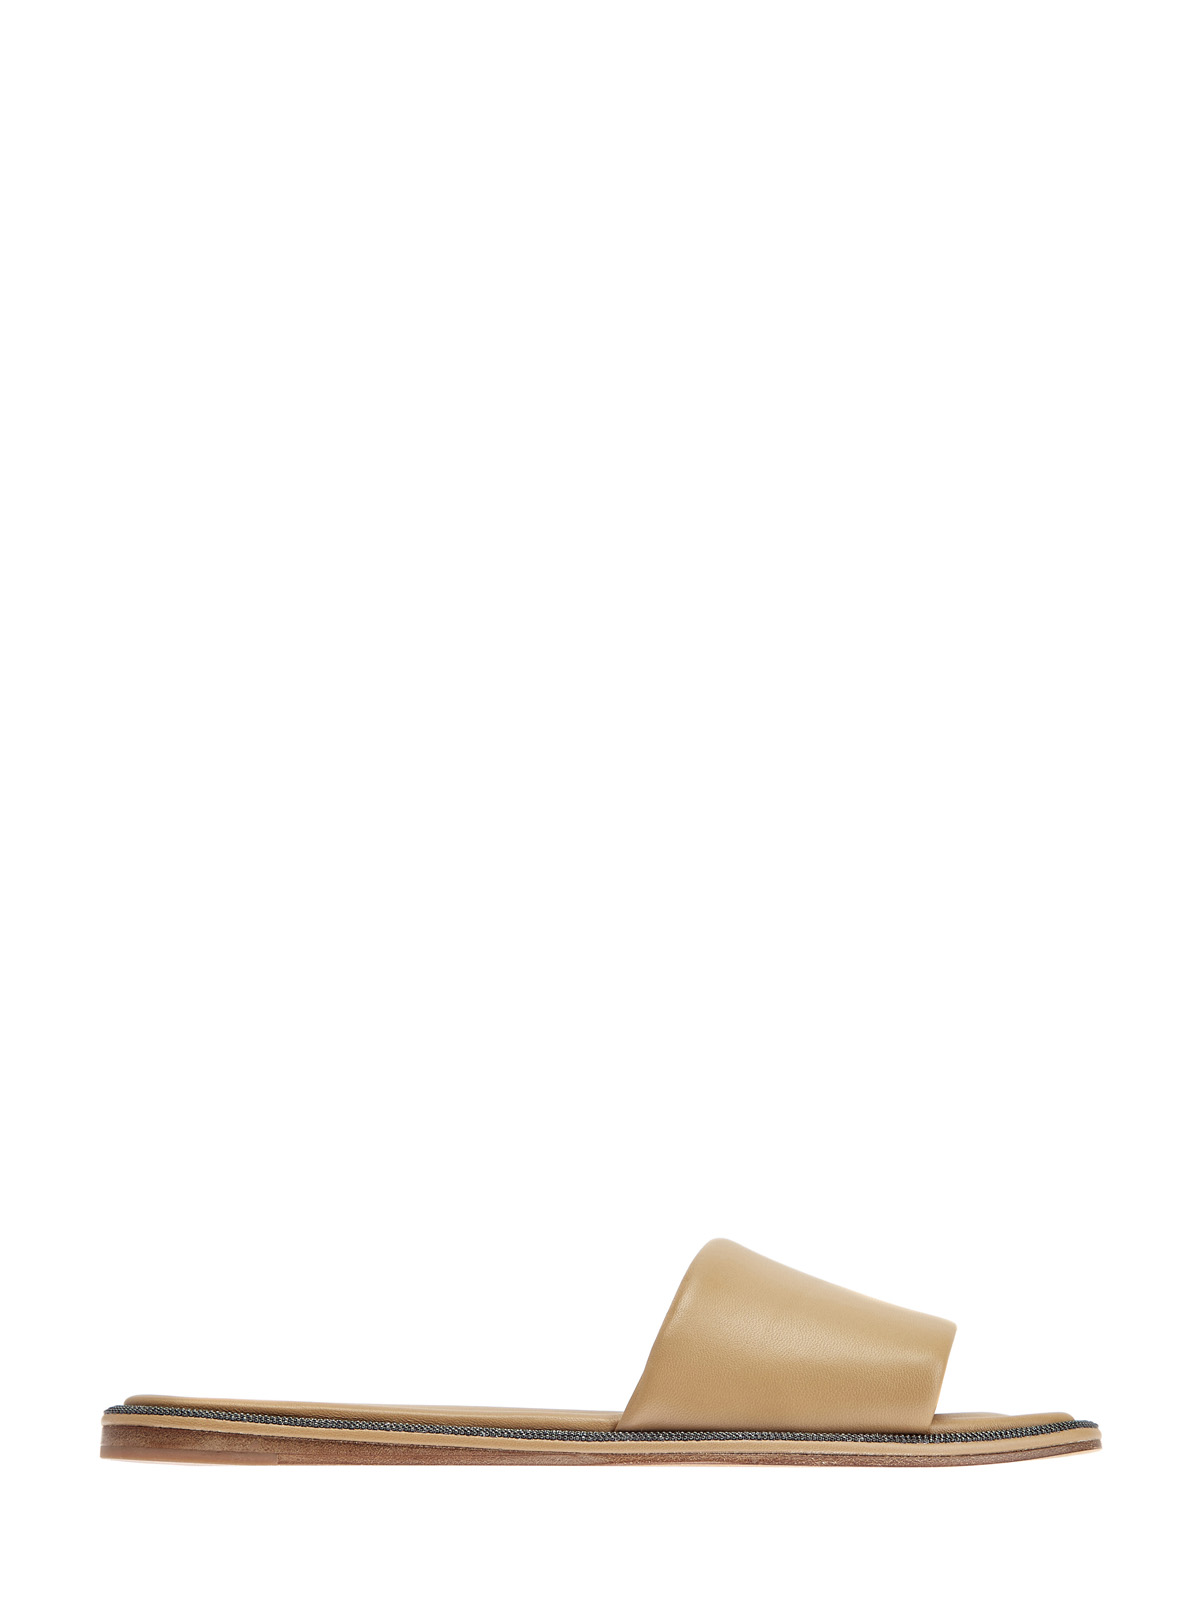 Шлепанцы из кожи наппа Soft с мерцающим рантом BRUNELLO CUCINELLI, цвет коричневый, размер 36.5;37.5 - фото 1